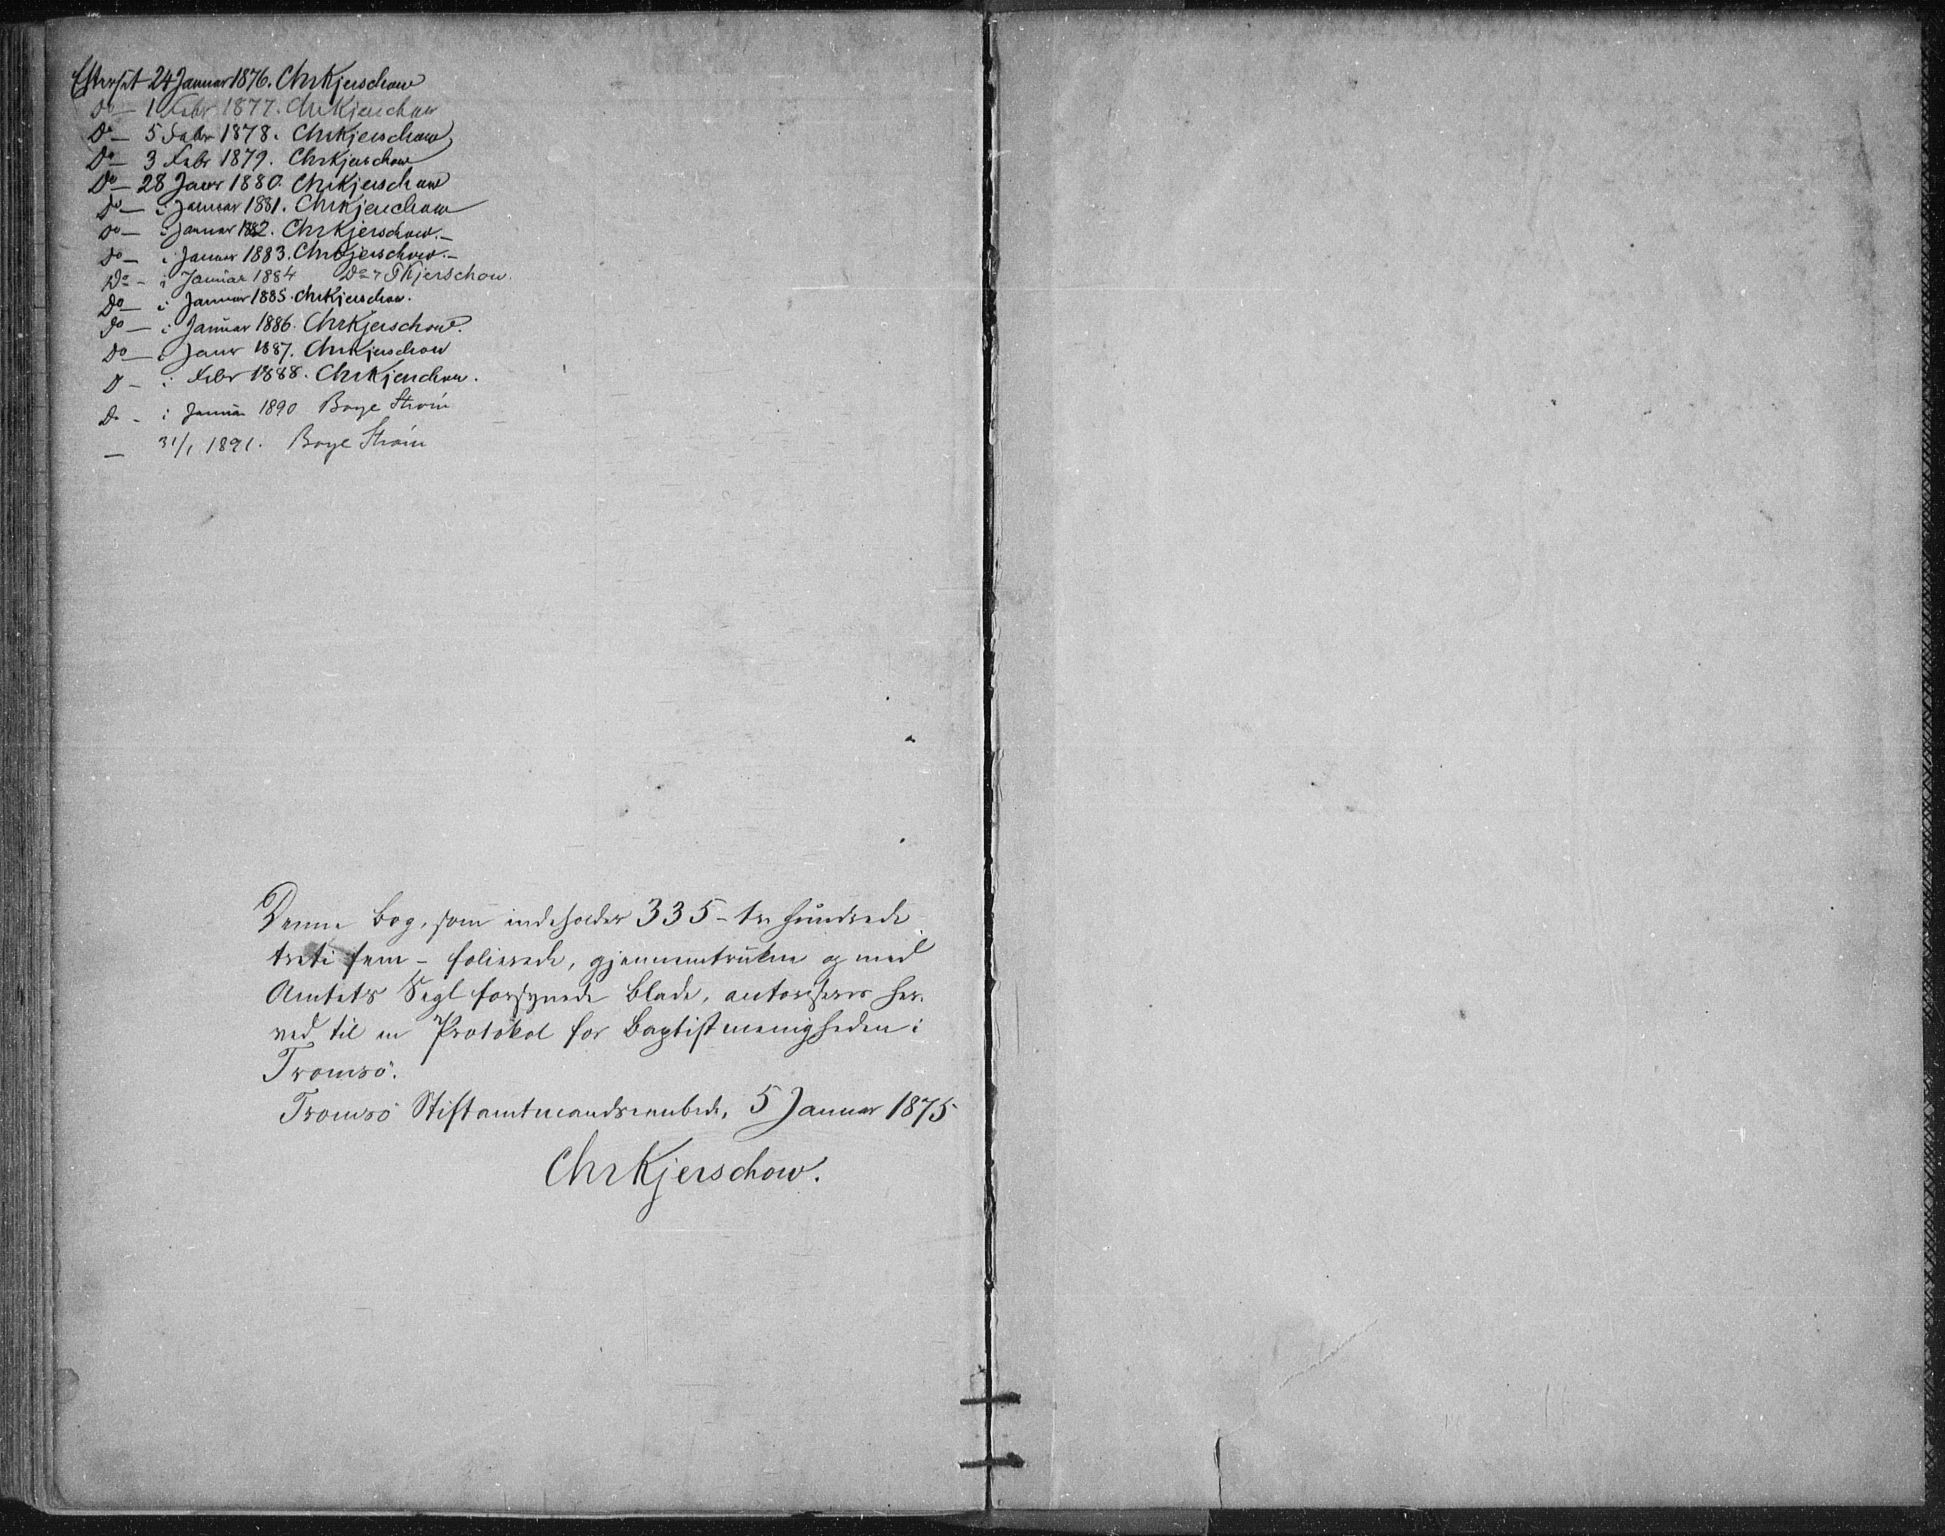 Uten arkivreferanse, SATØ/-: Dissenter register no. DP 3, 1871-1893